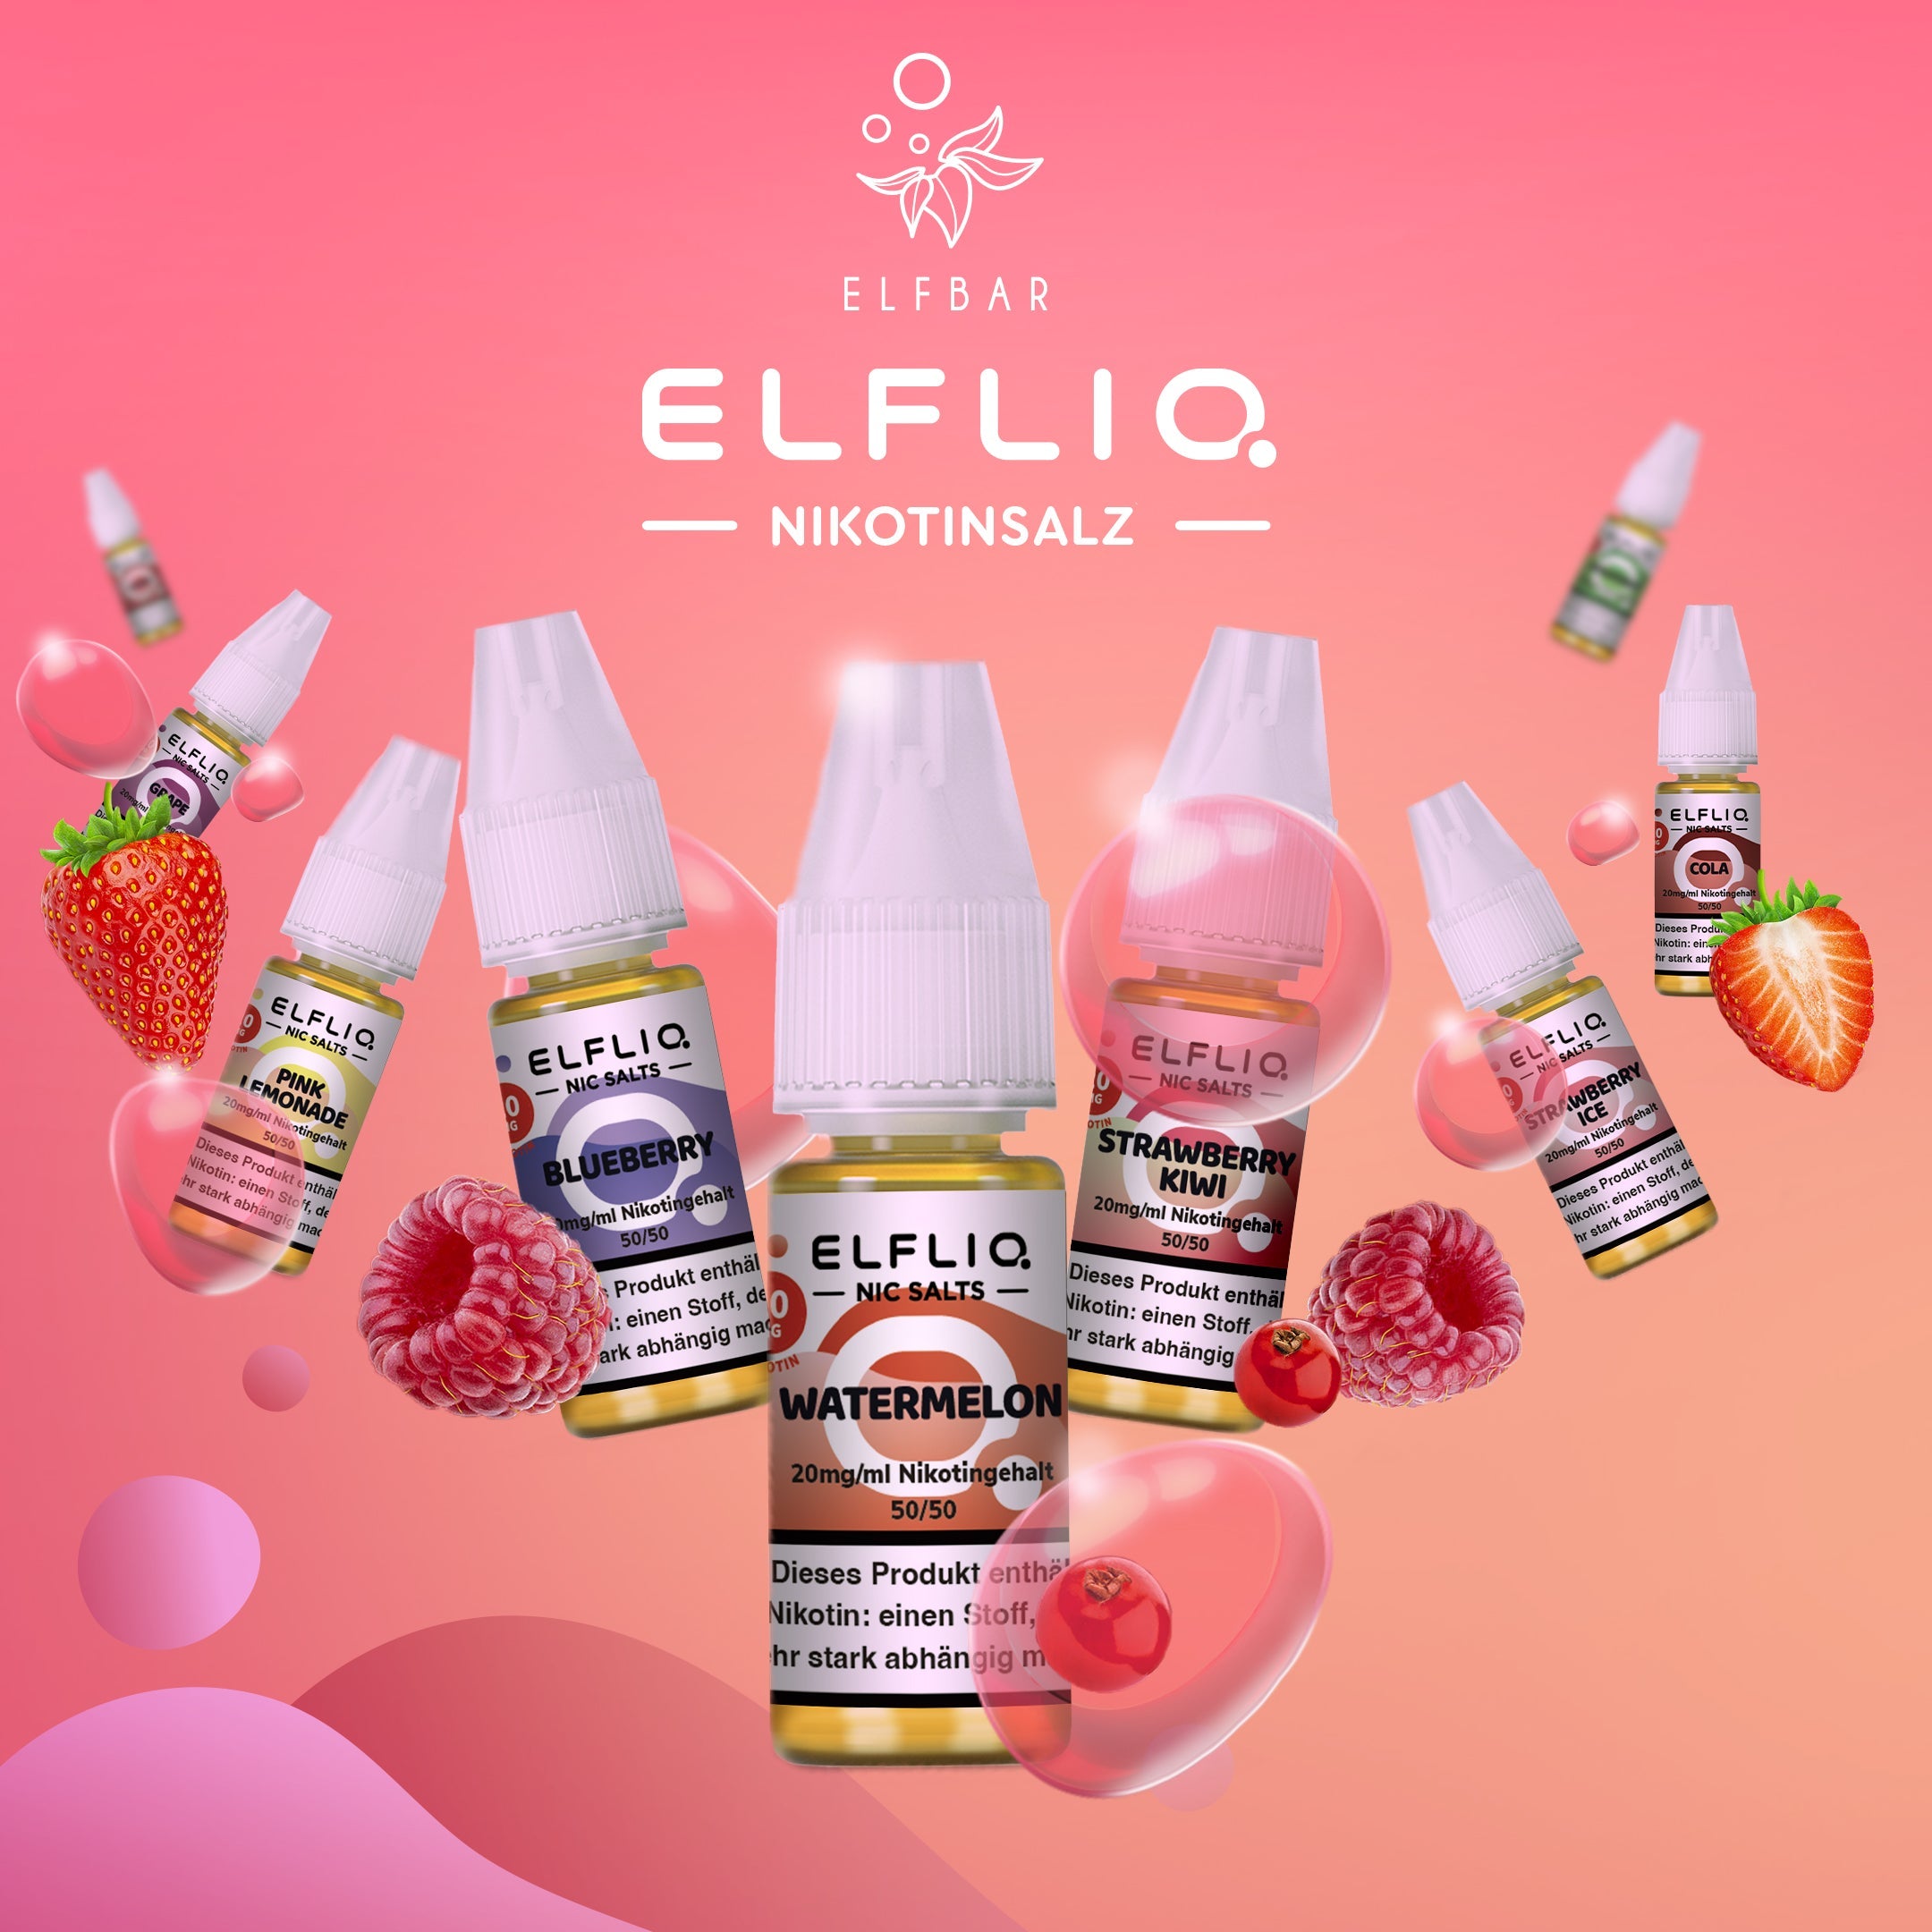 Elfbar ELFLIQ Liquids